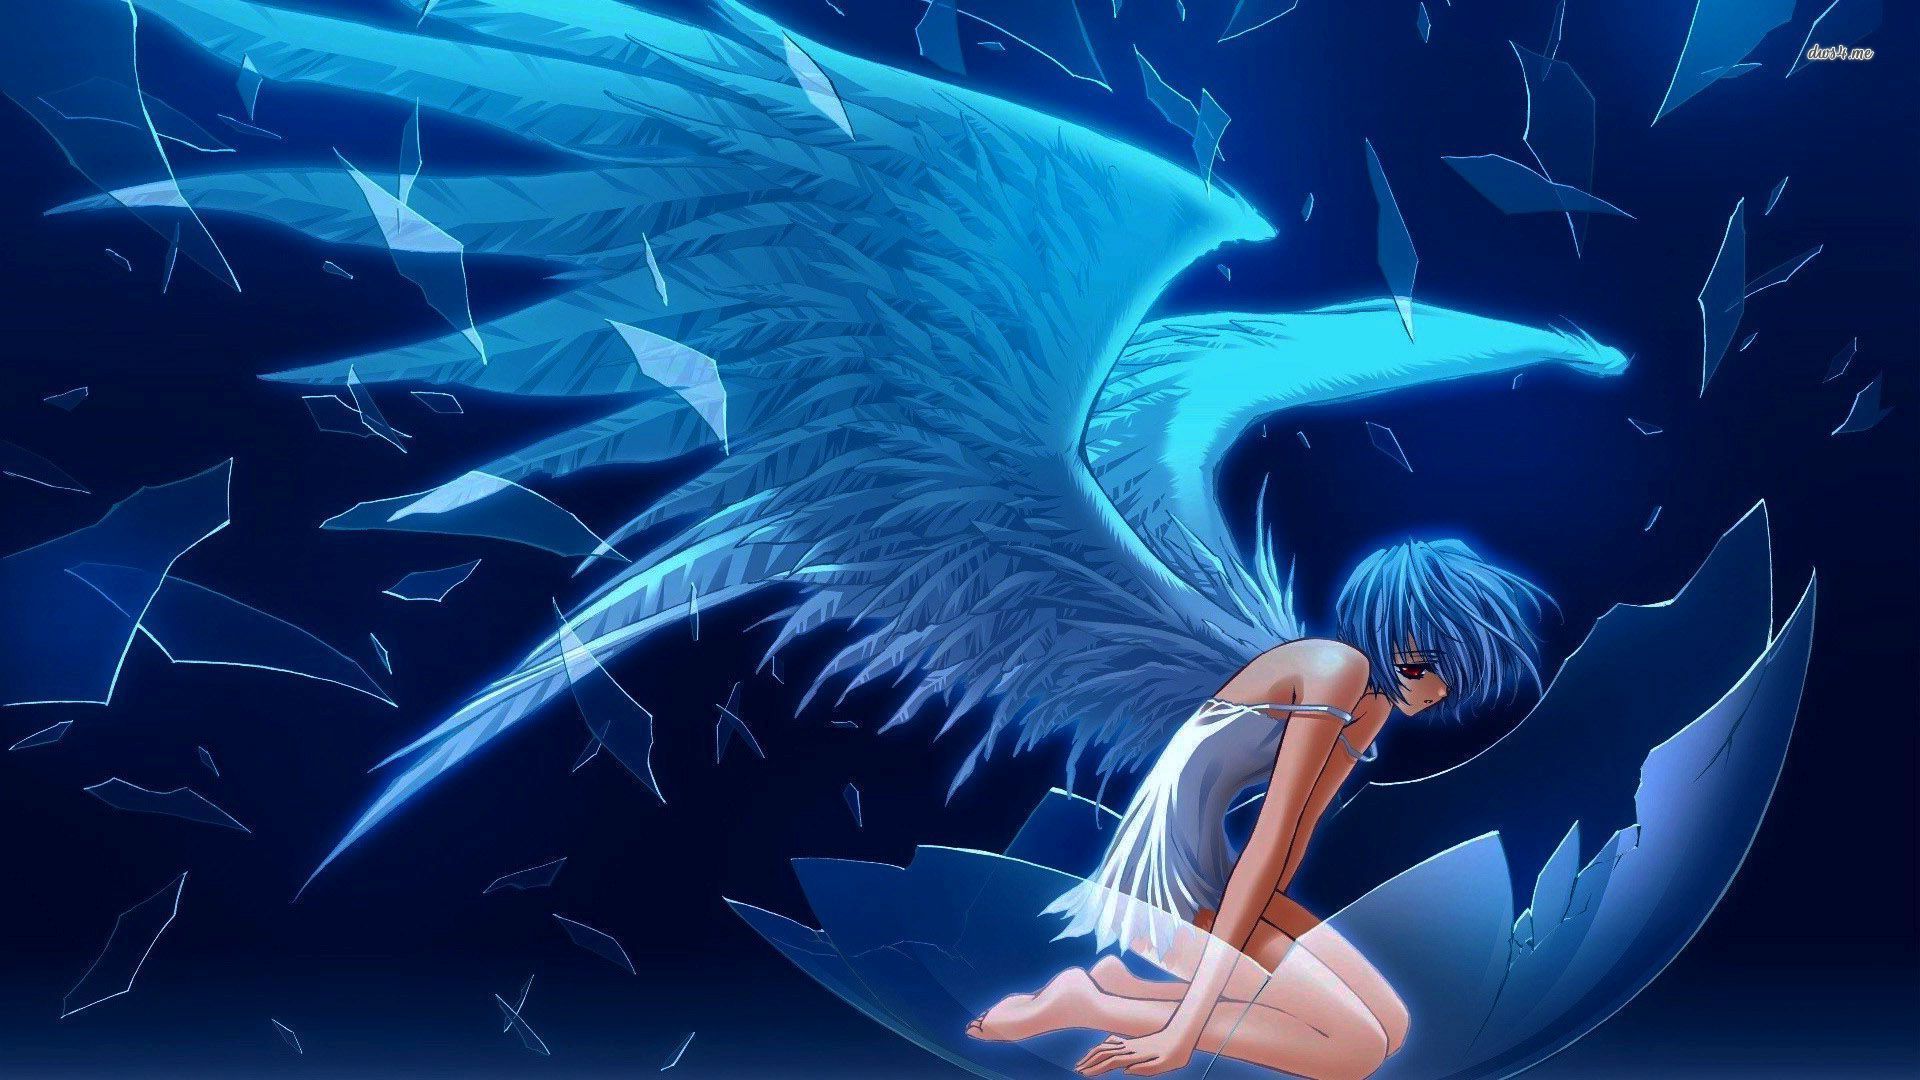 Blue Angel wallpaper - Anime wallpapers -